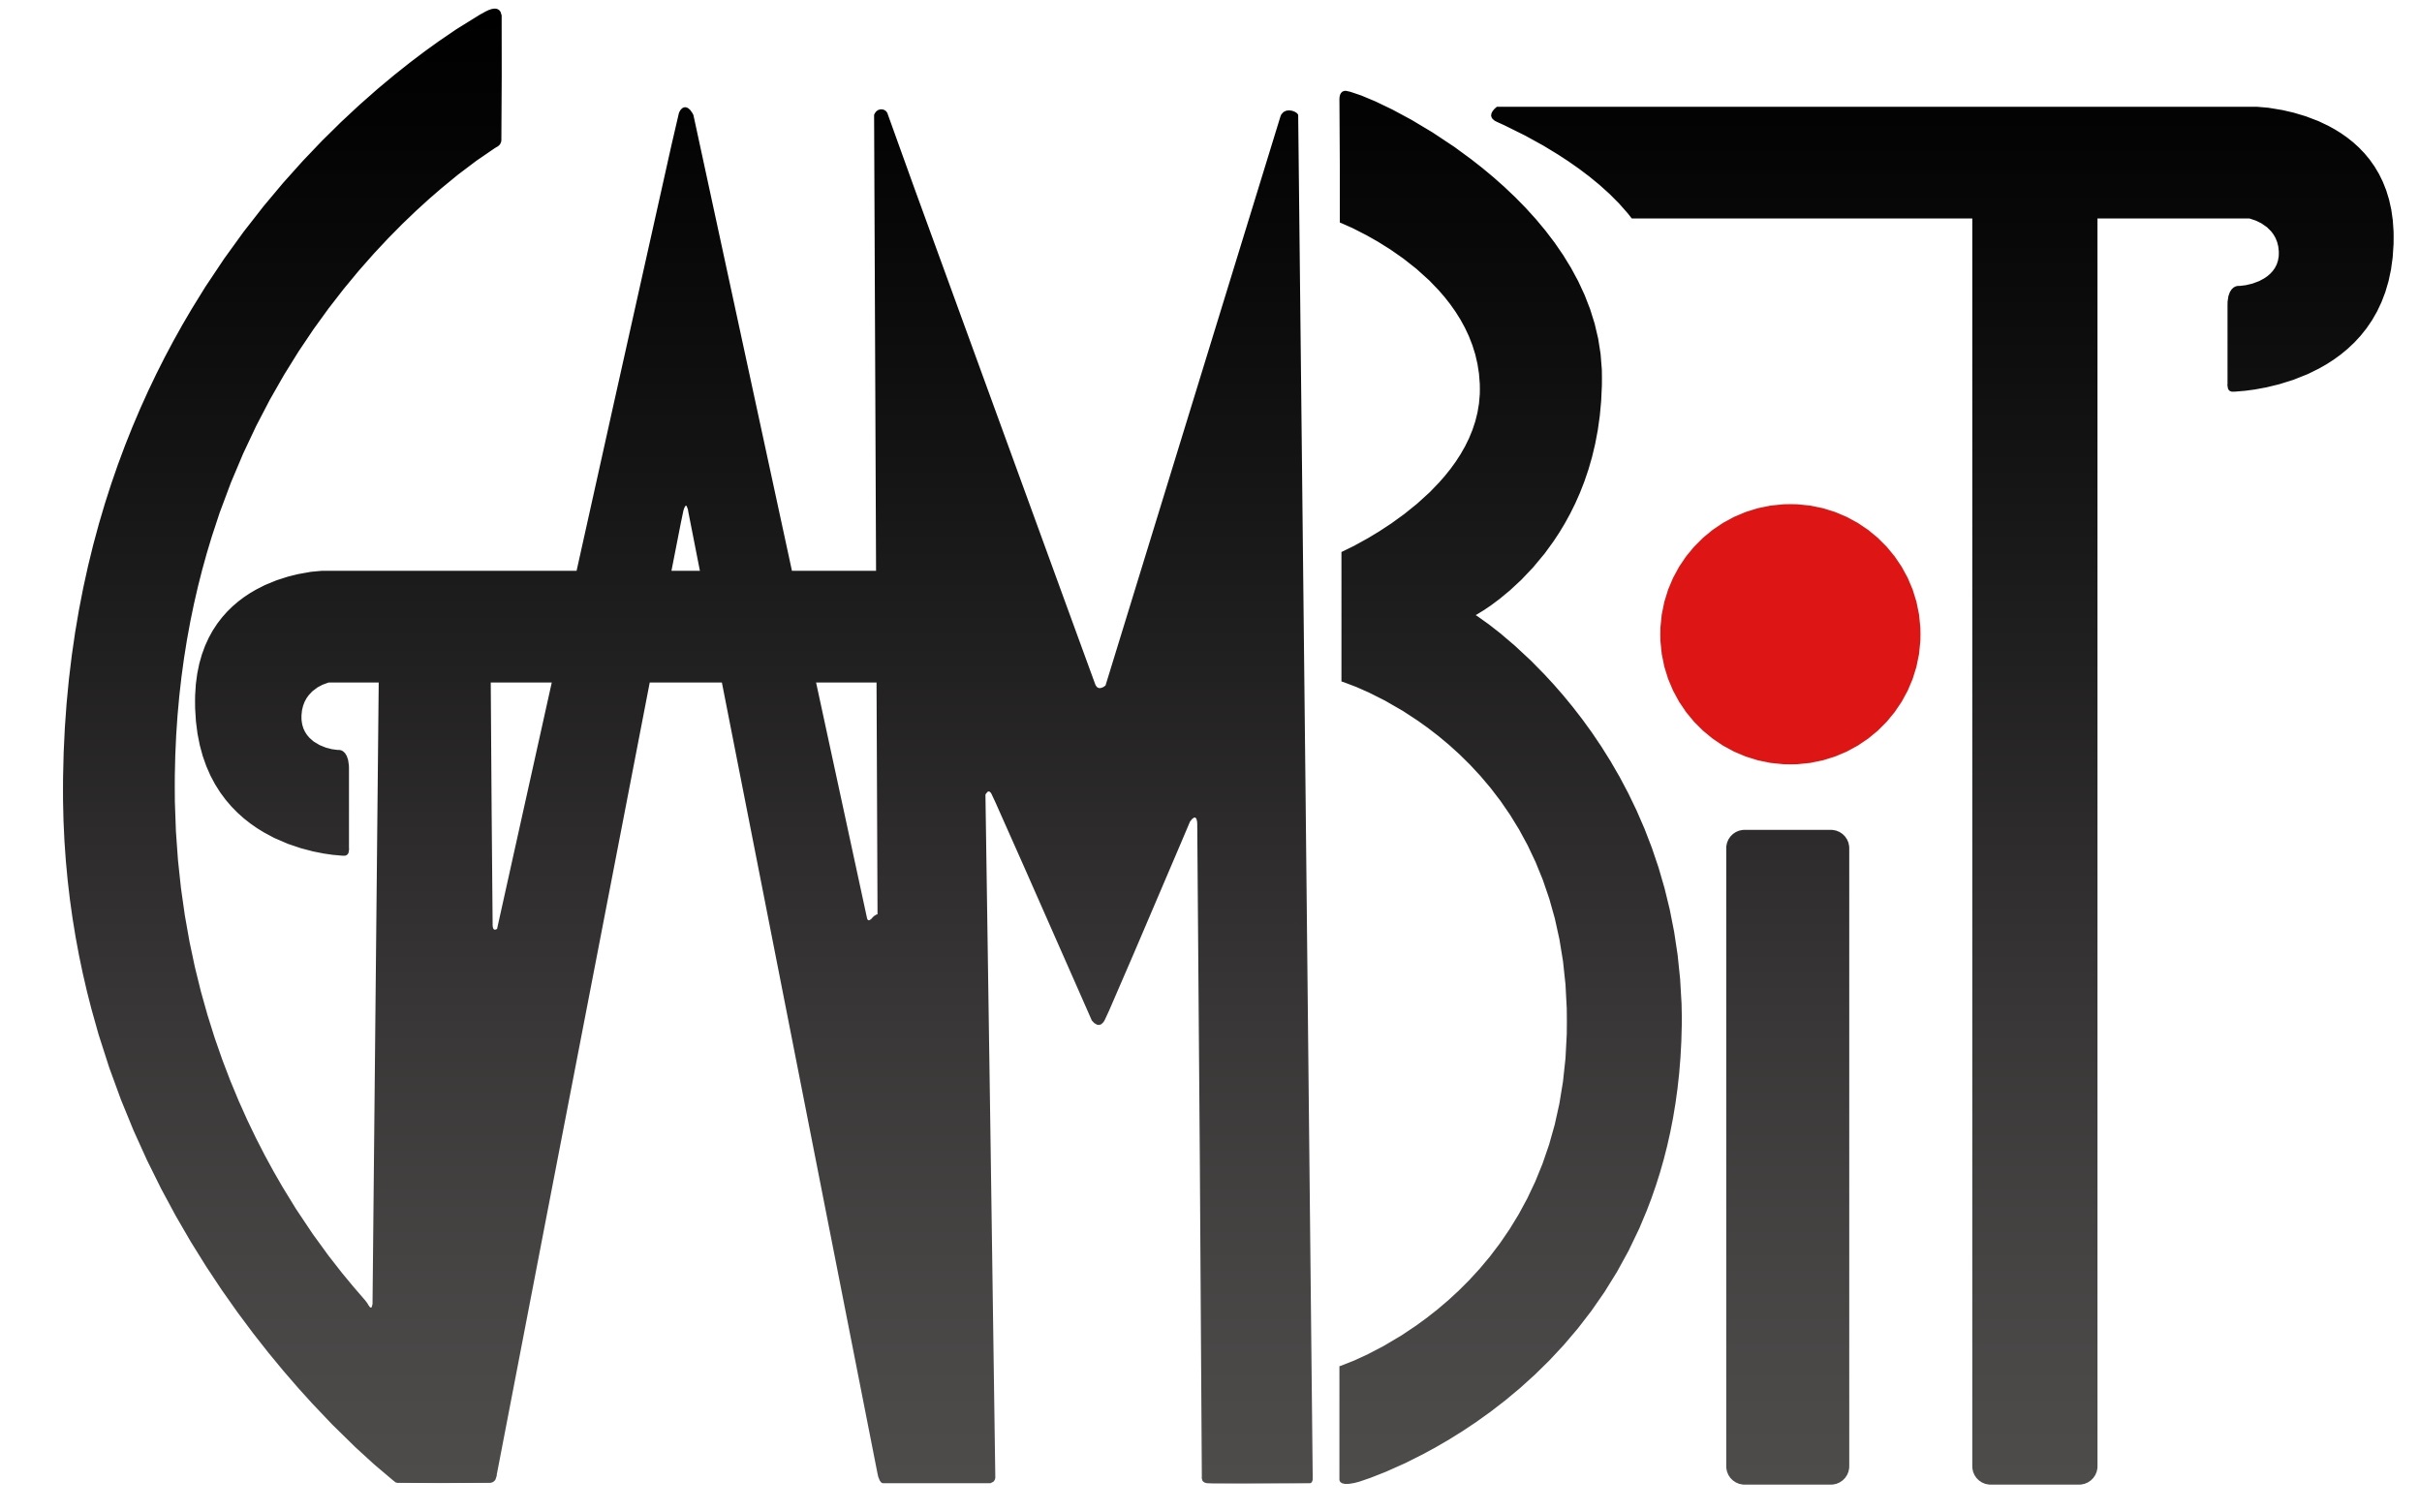 GAMBIT Logo.jpg 9bfbf0905aa34a01f689bc37fa7e26d7